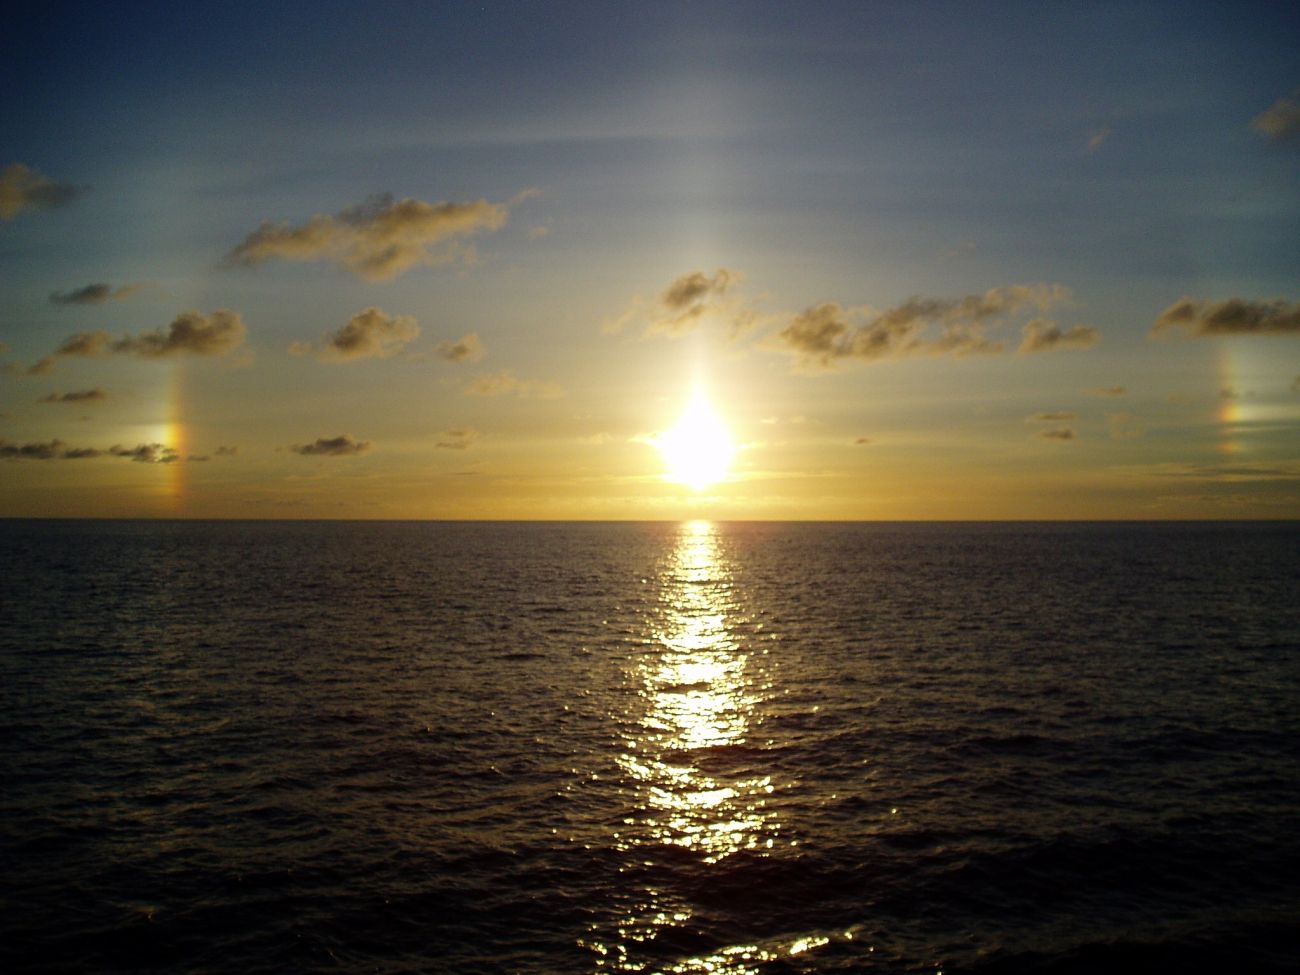 A tropical sunset over a placid sea